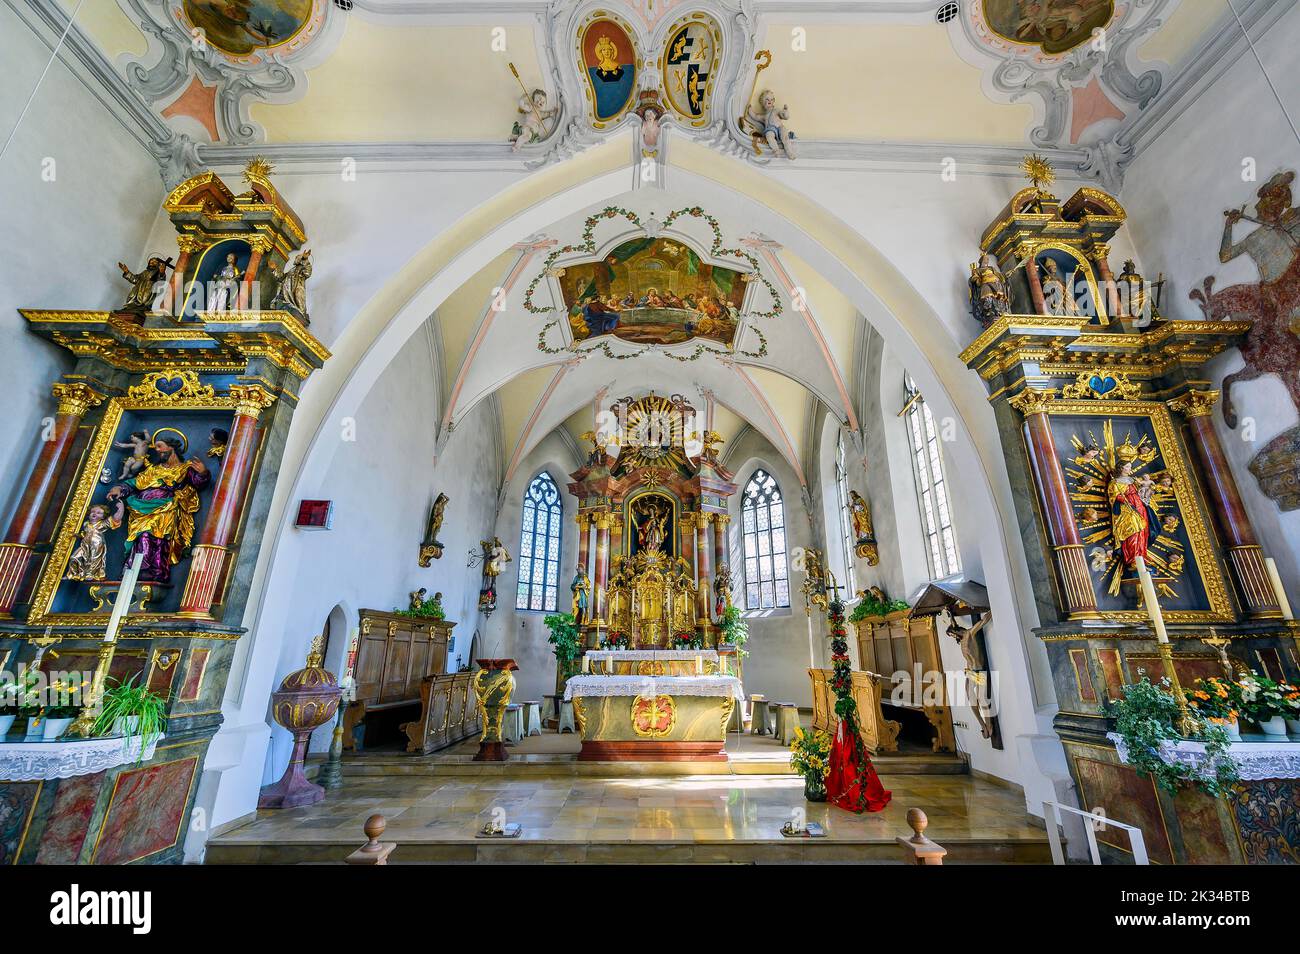 Main altar and side altars, Church of St. Anna in Betzigau, Allgaeu, Bavaria, Germany Stock Photo